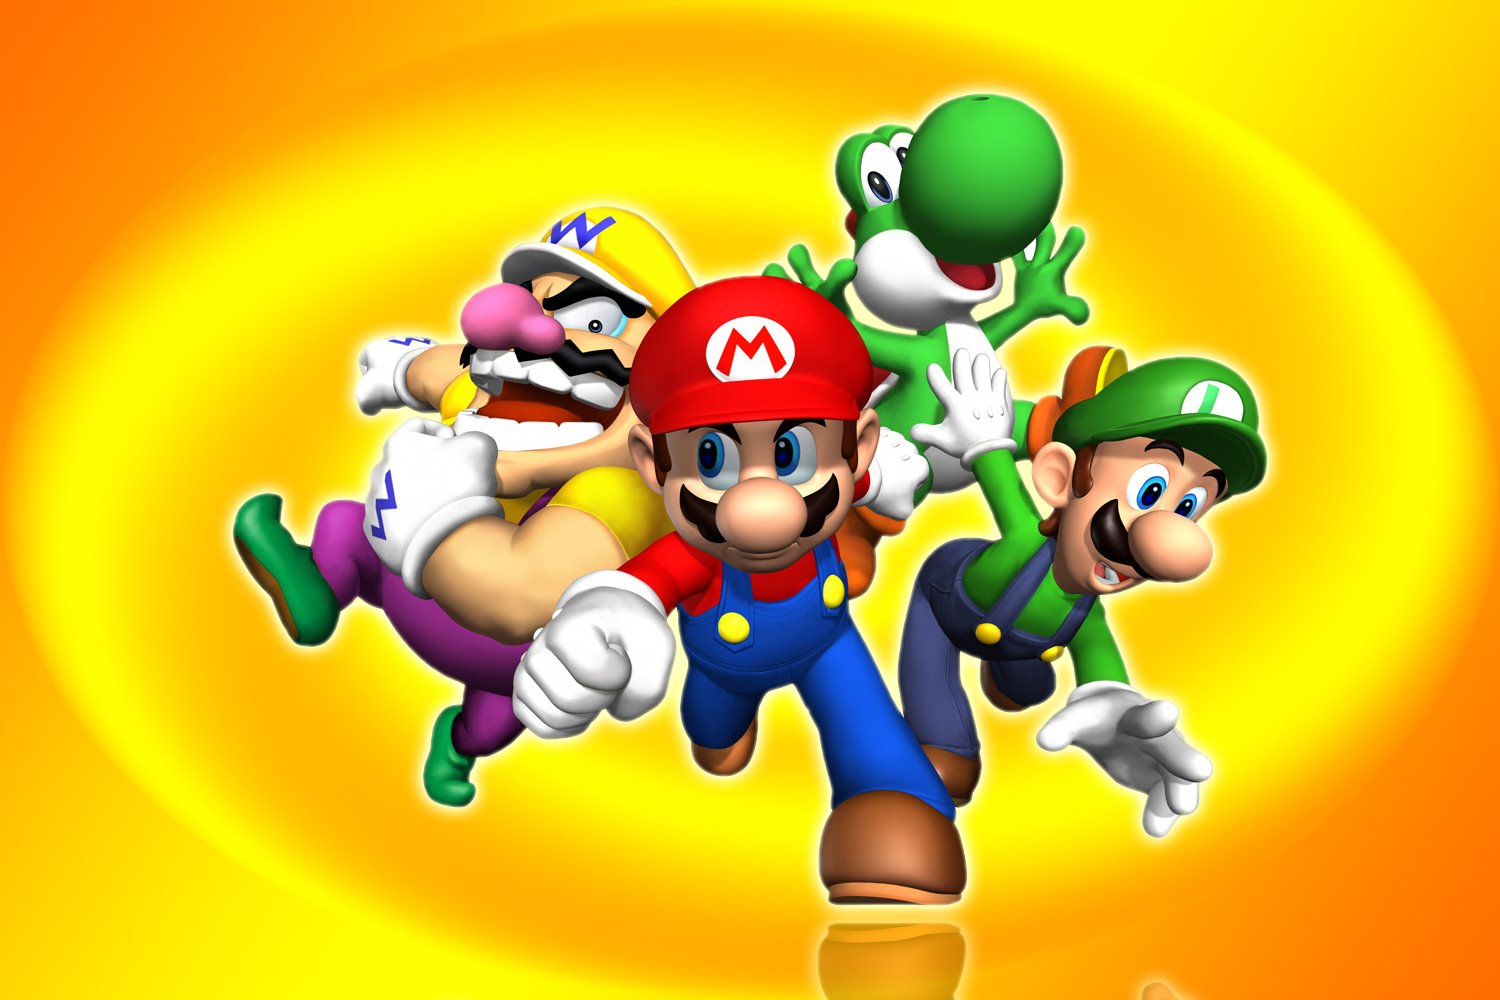 Super mario bros game. Супер Марио супермарио. Супер Марио герои игры. Марио (персонаж игр). Супер братья Марио игра.